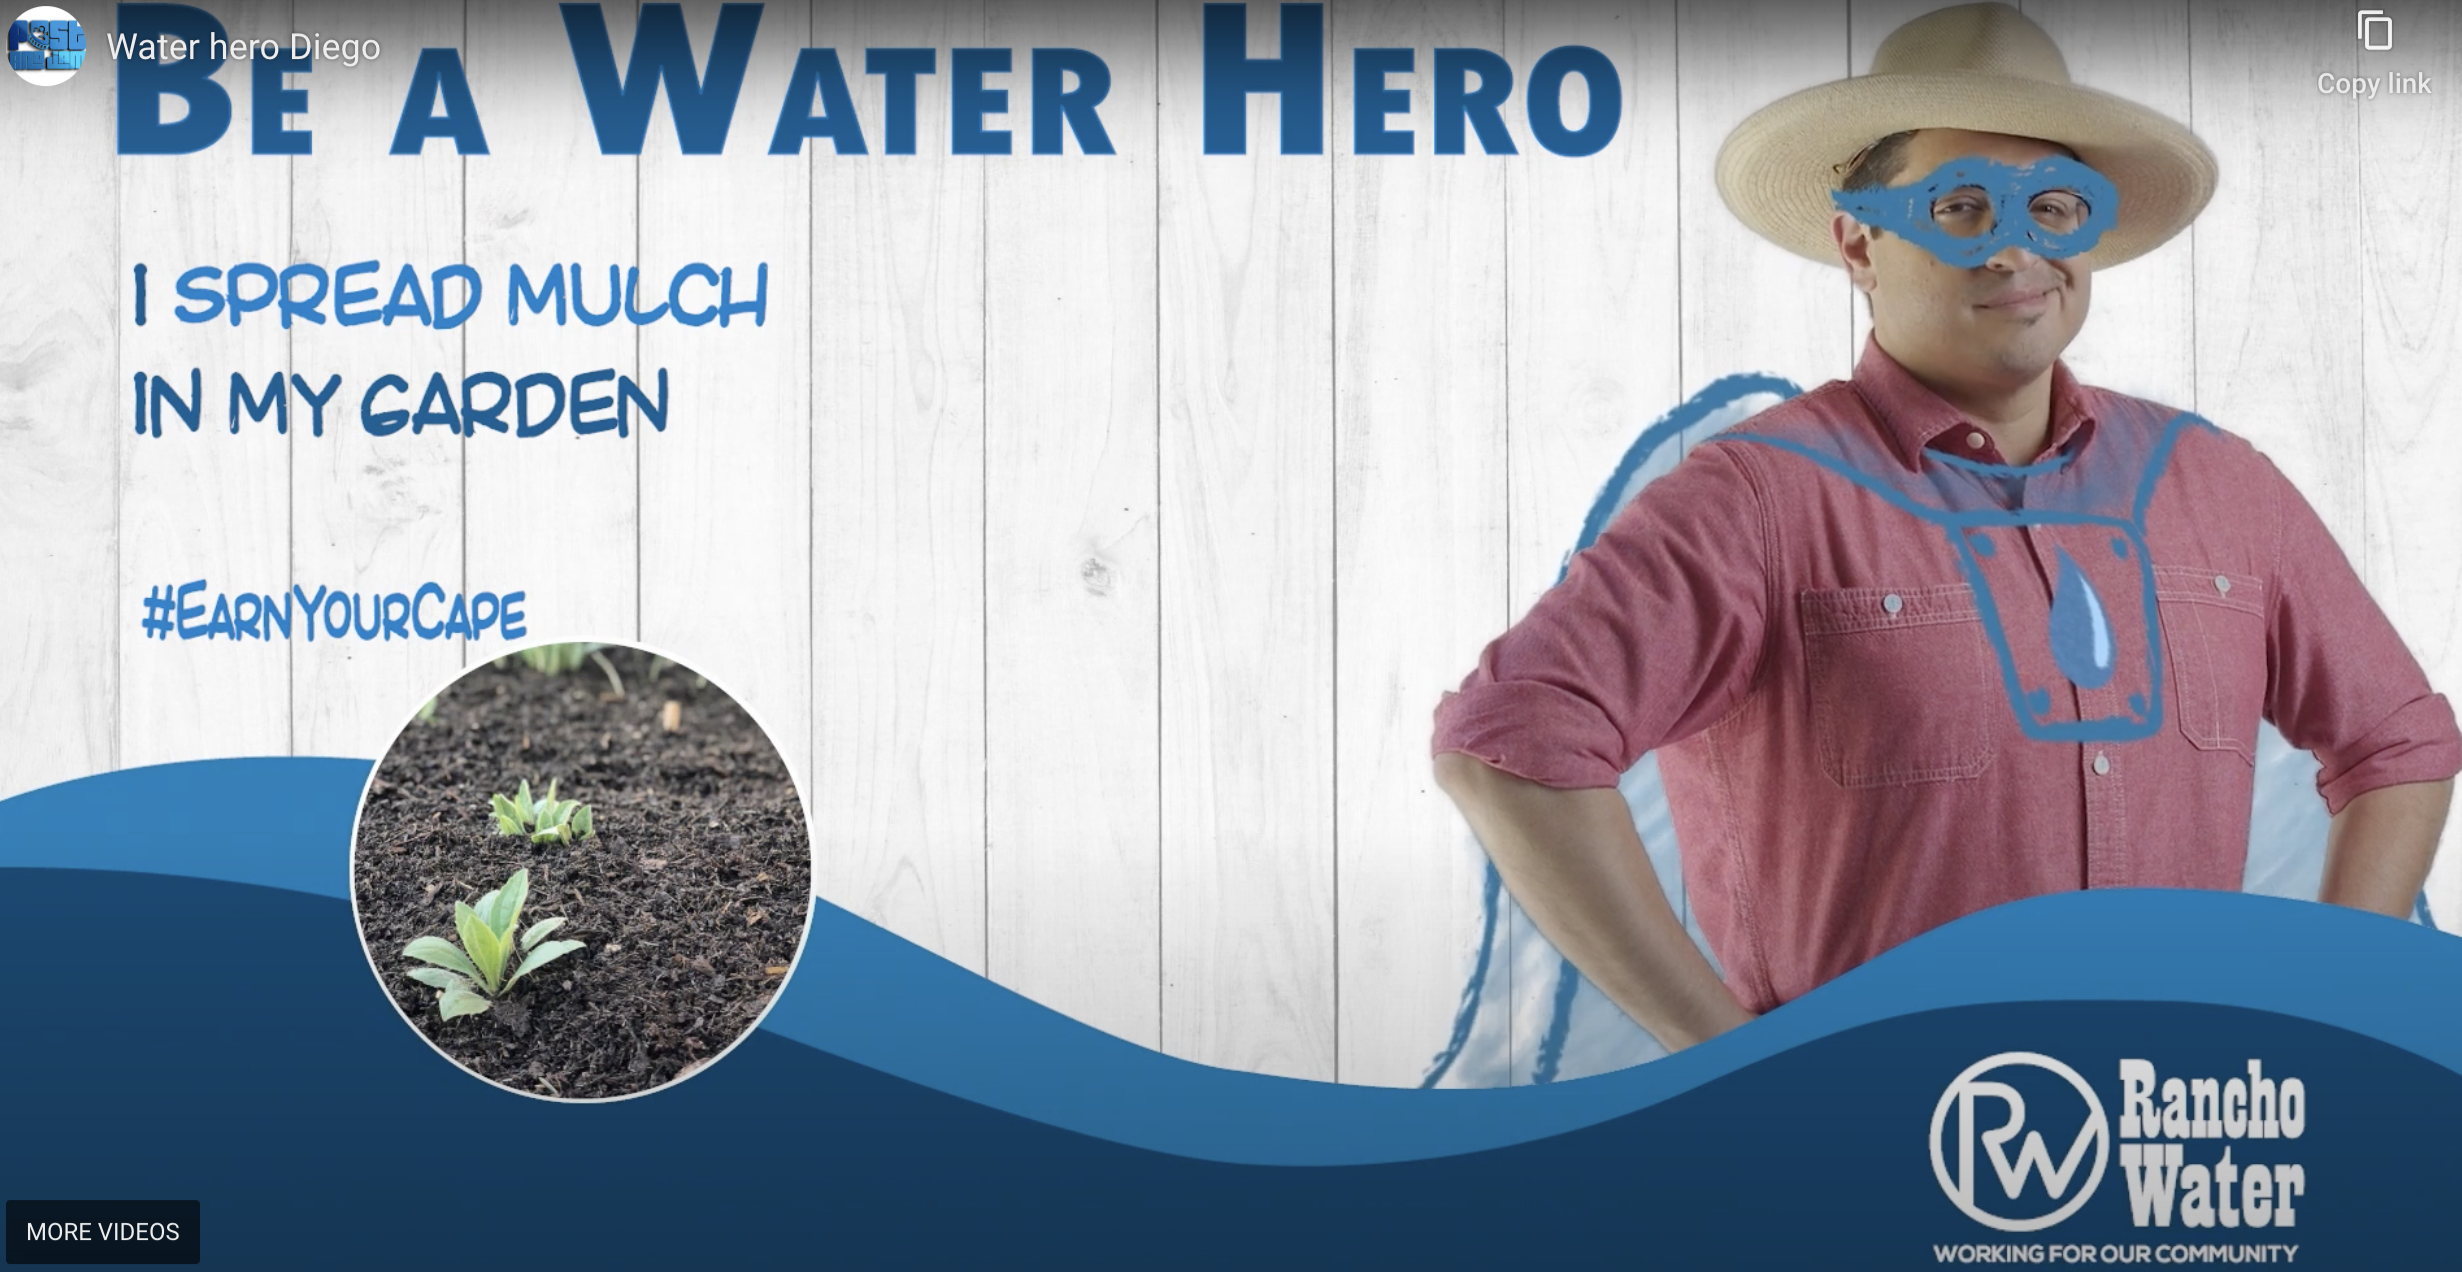 RCWD Water hero Diego